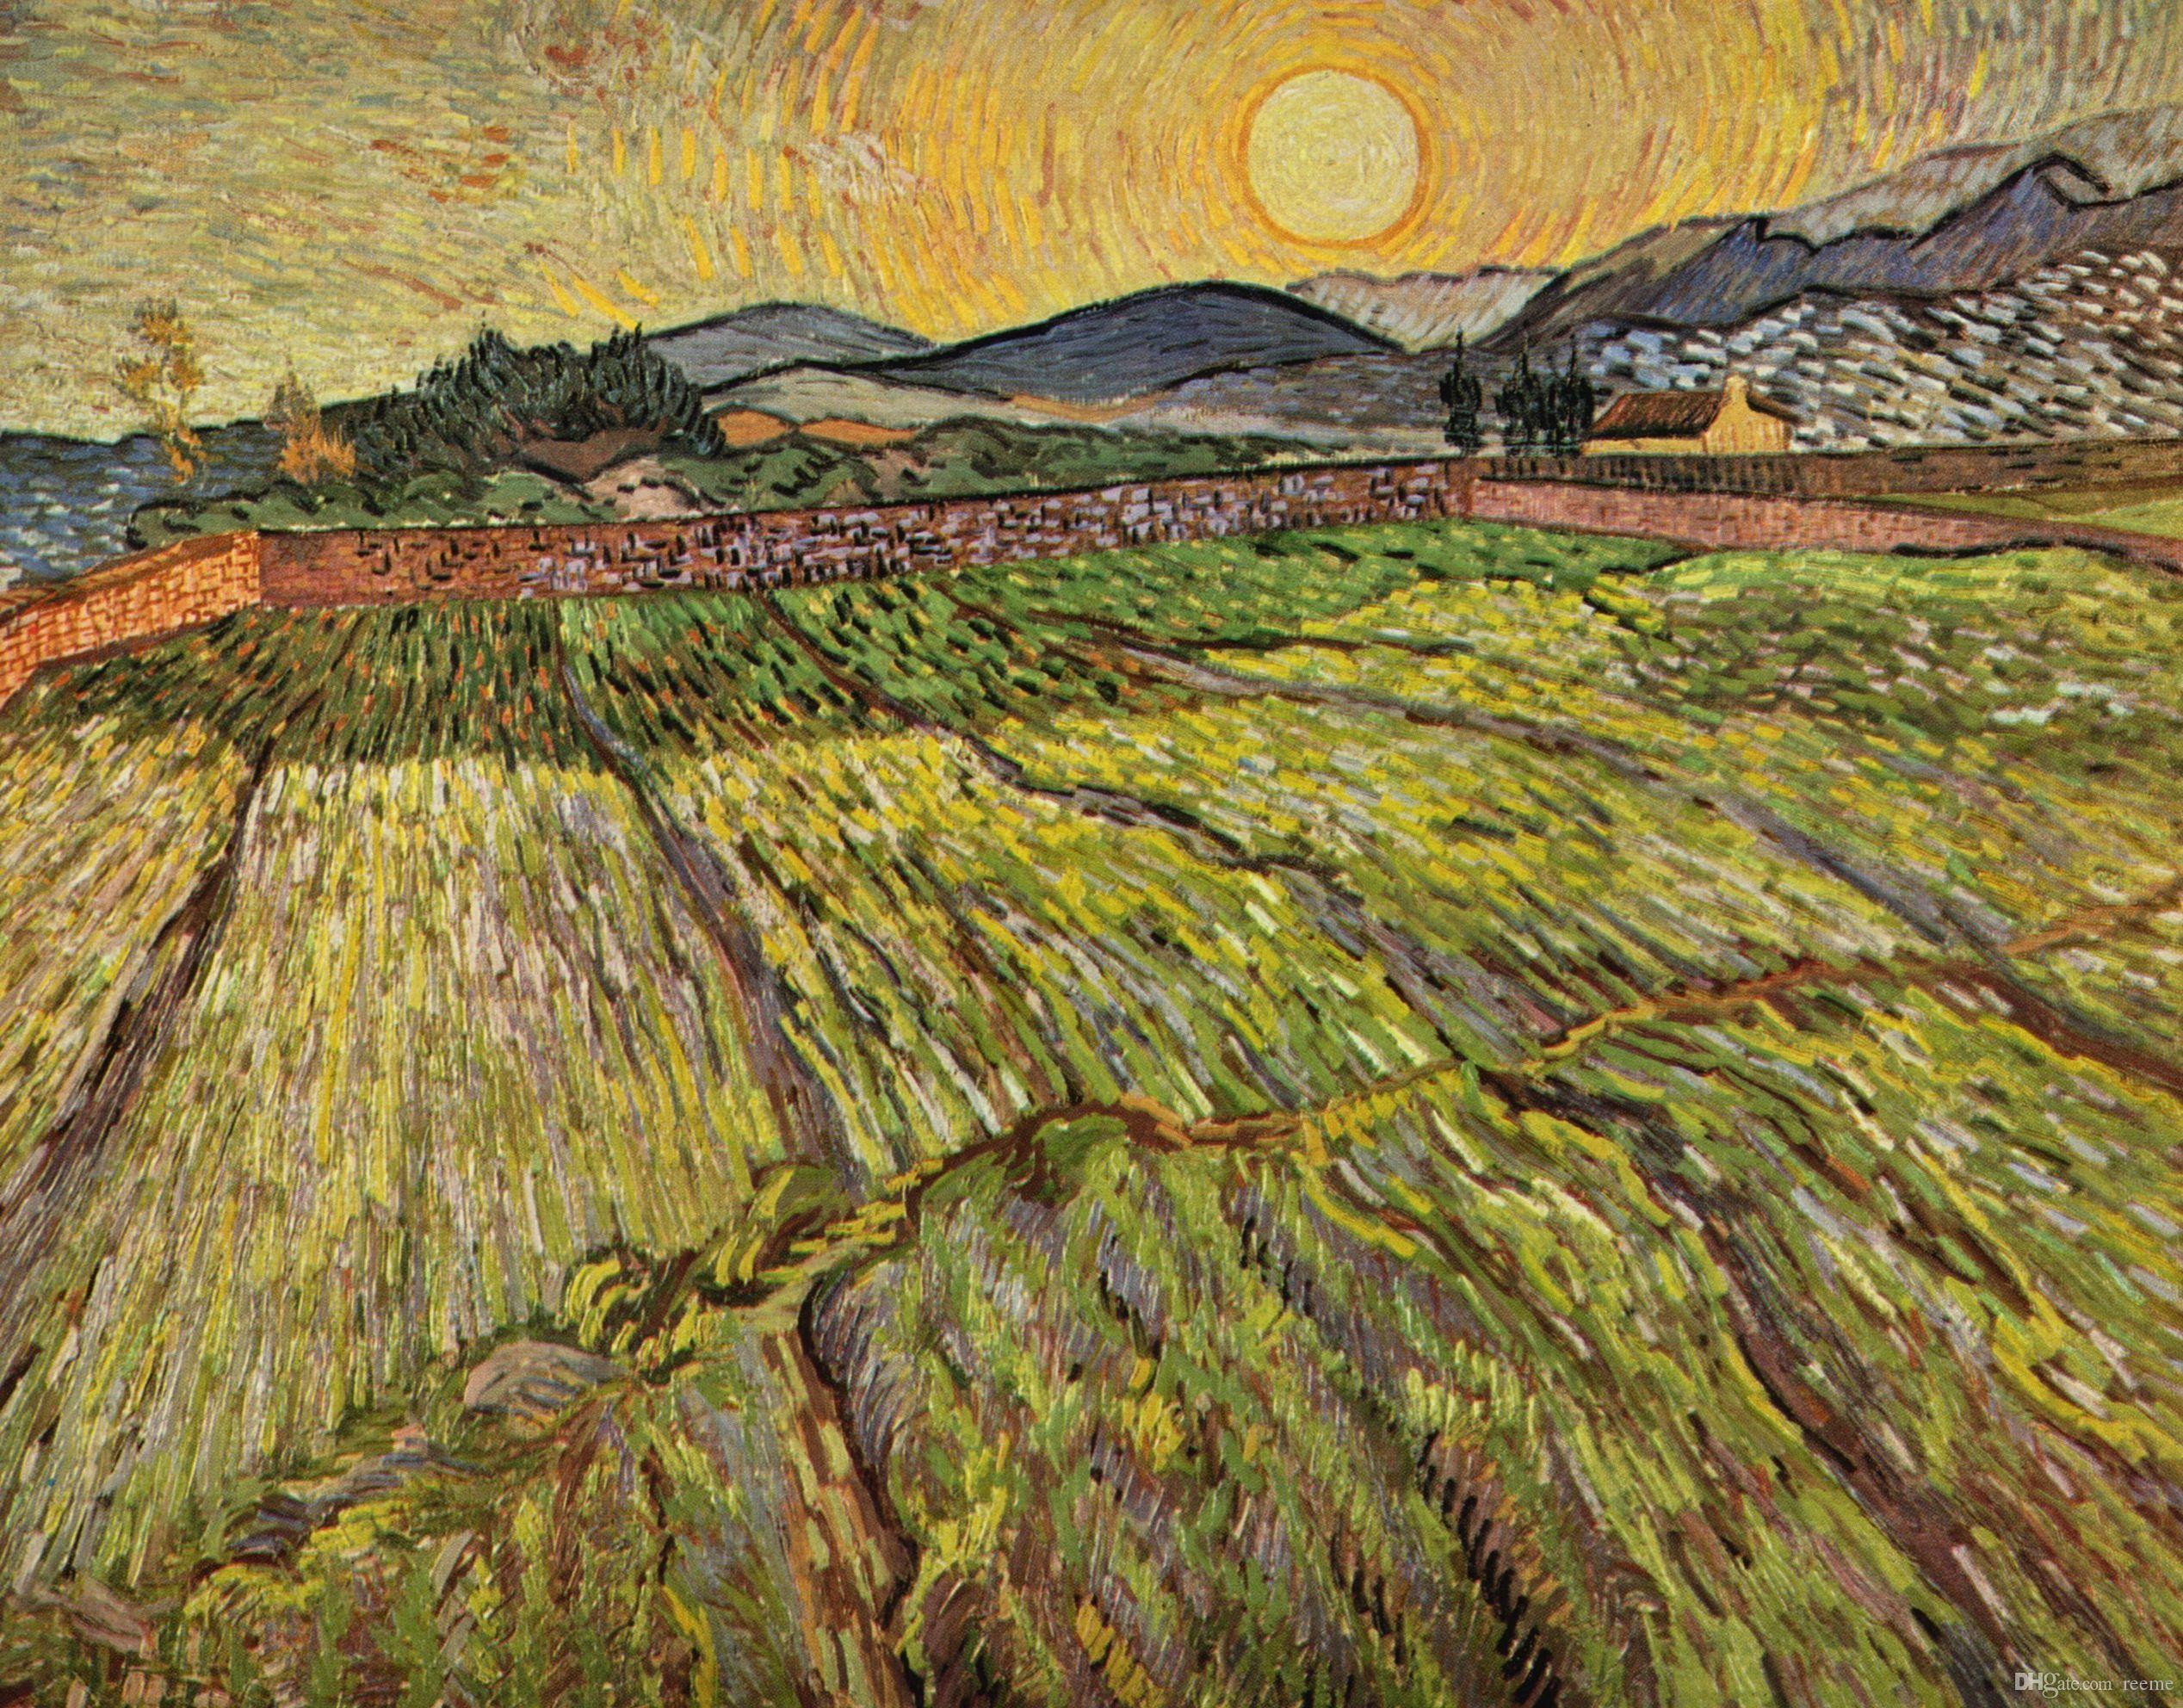 Best ideas about Van Gogh Landscape
. Save or Pin Vincent Van Gogh Decoration Oil Painting Enclosed Field Now.